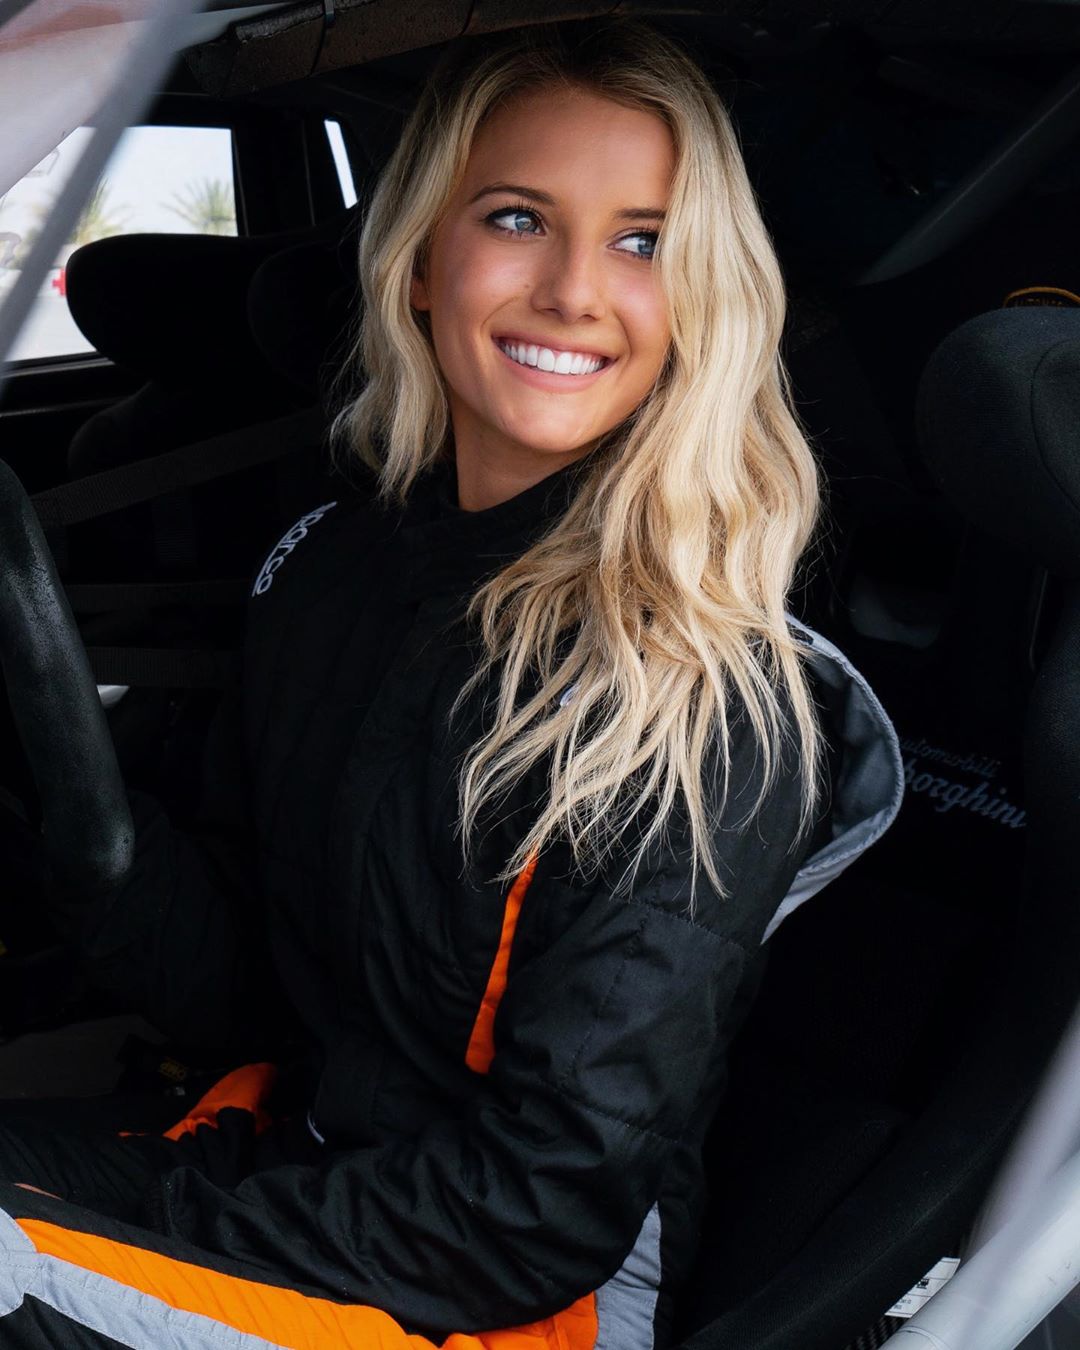 Racer Lindsay Brewe